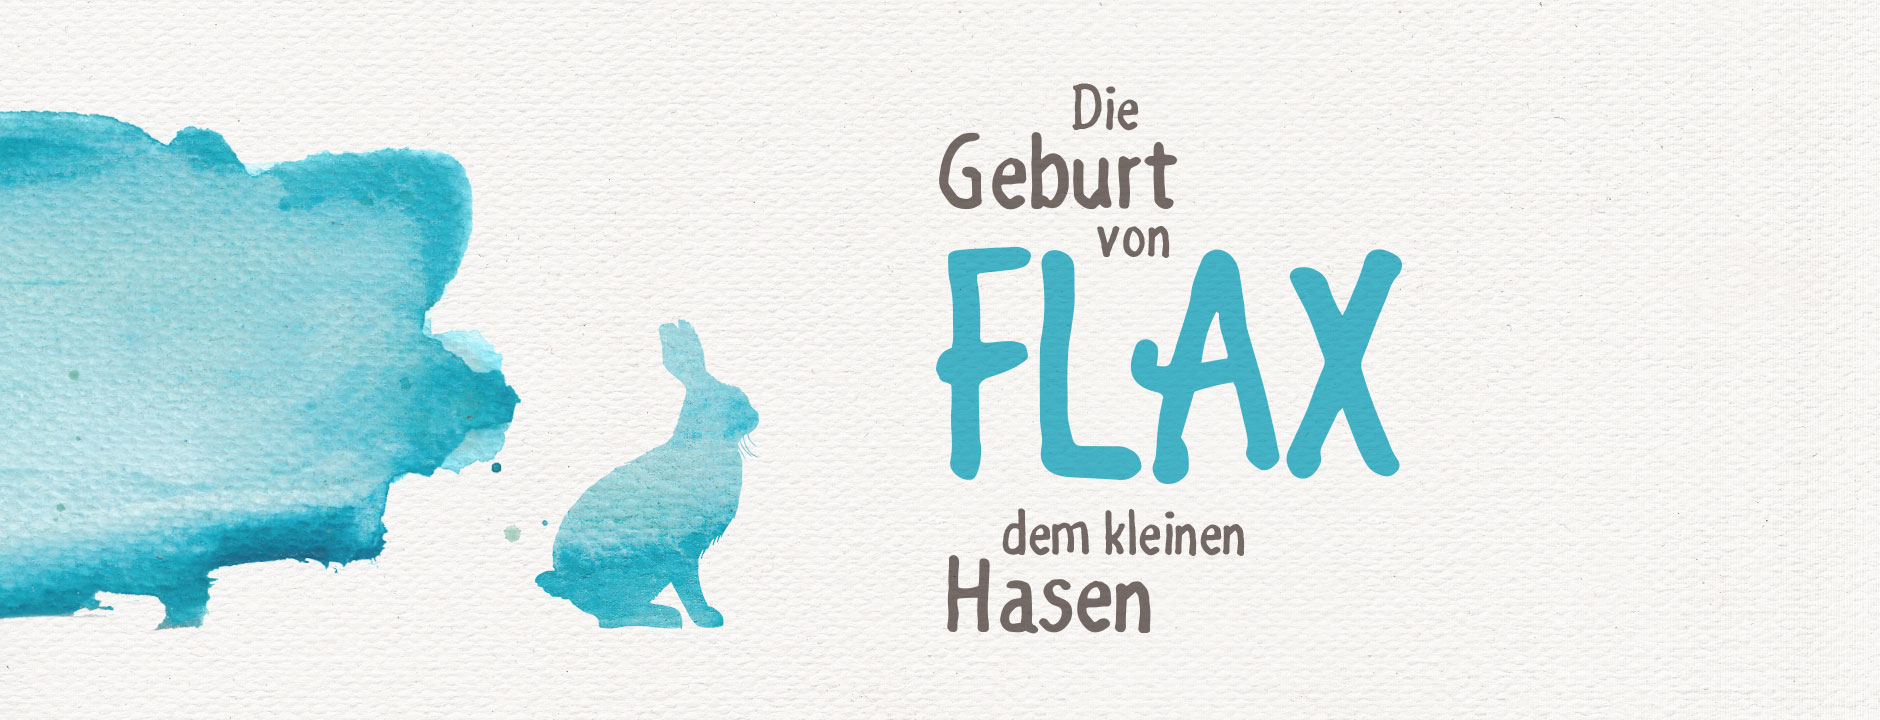 Hase Flax – Kinderbuch – Design im Aquarell-Stil